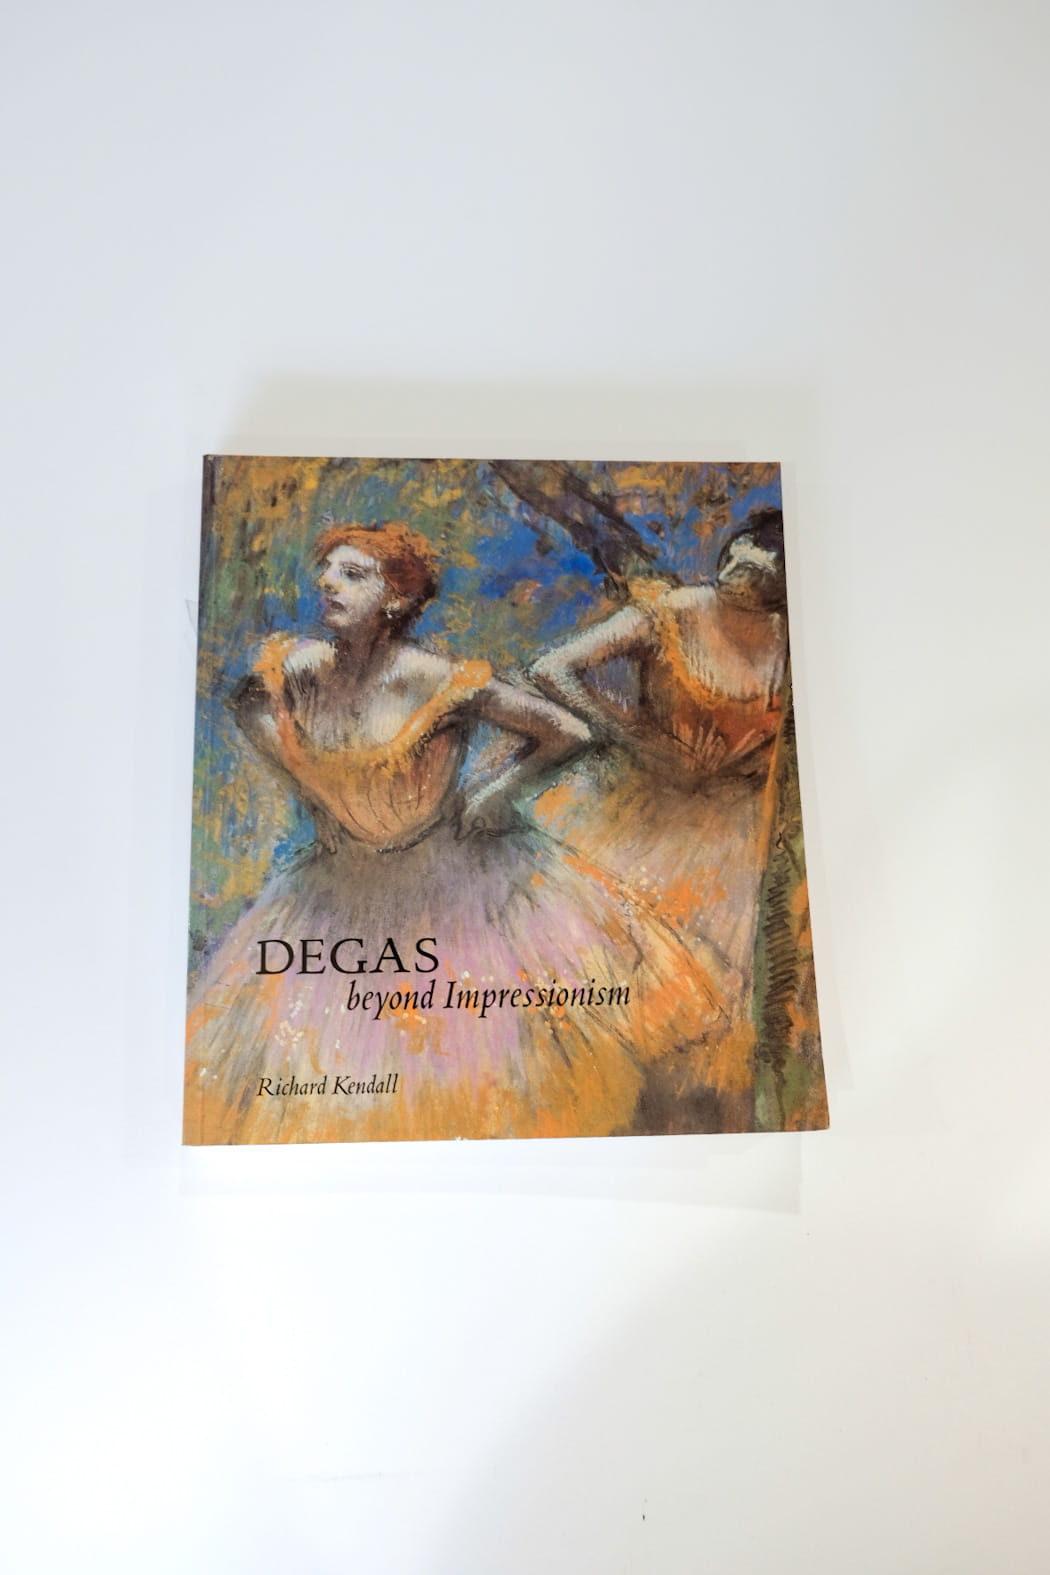 Degas beyond Impressionism by Richard Kendall